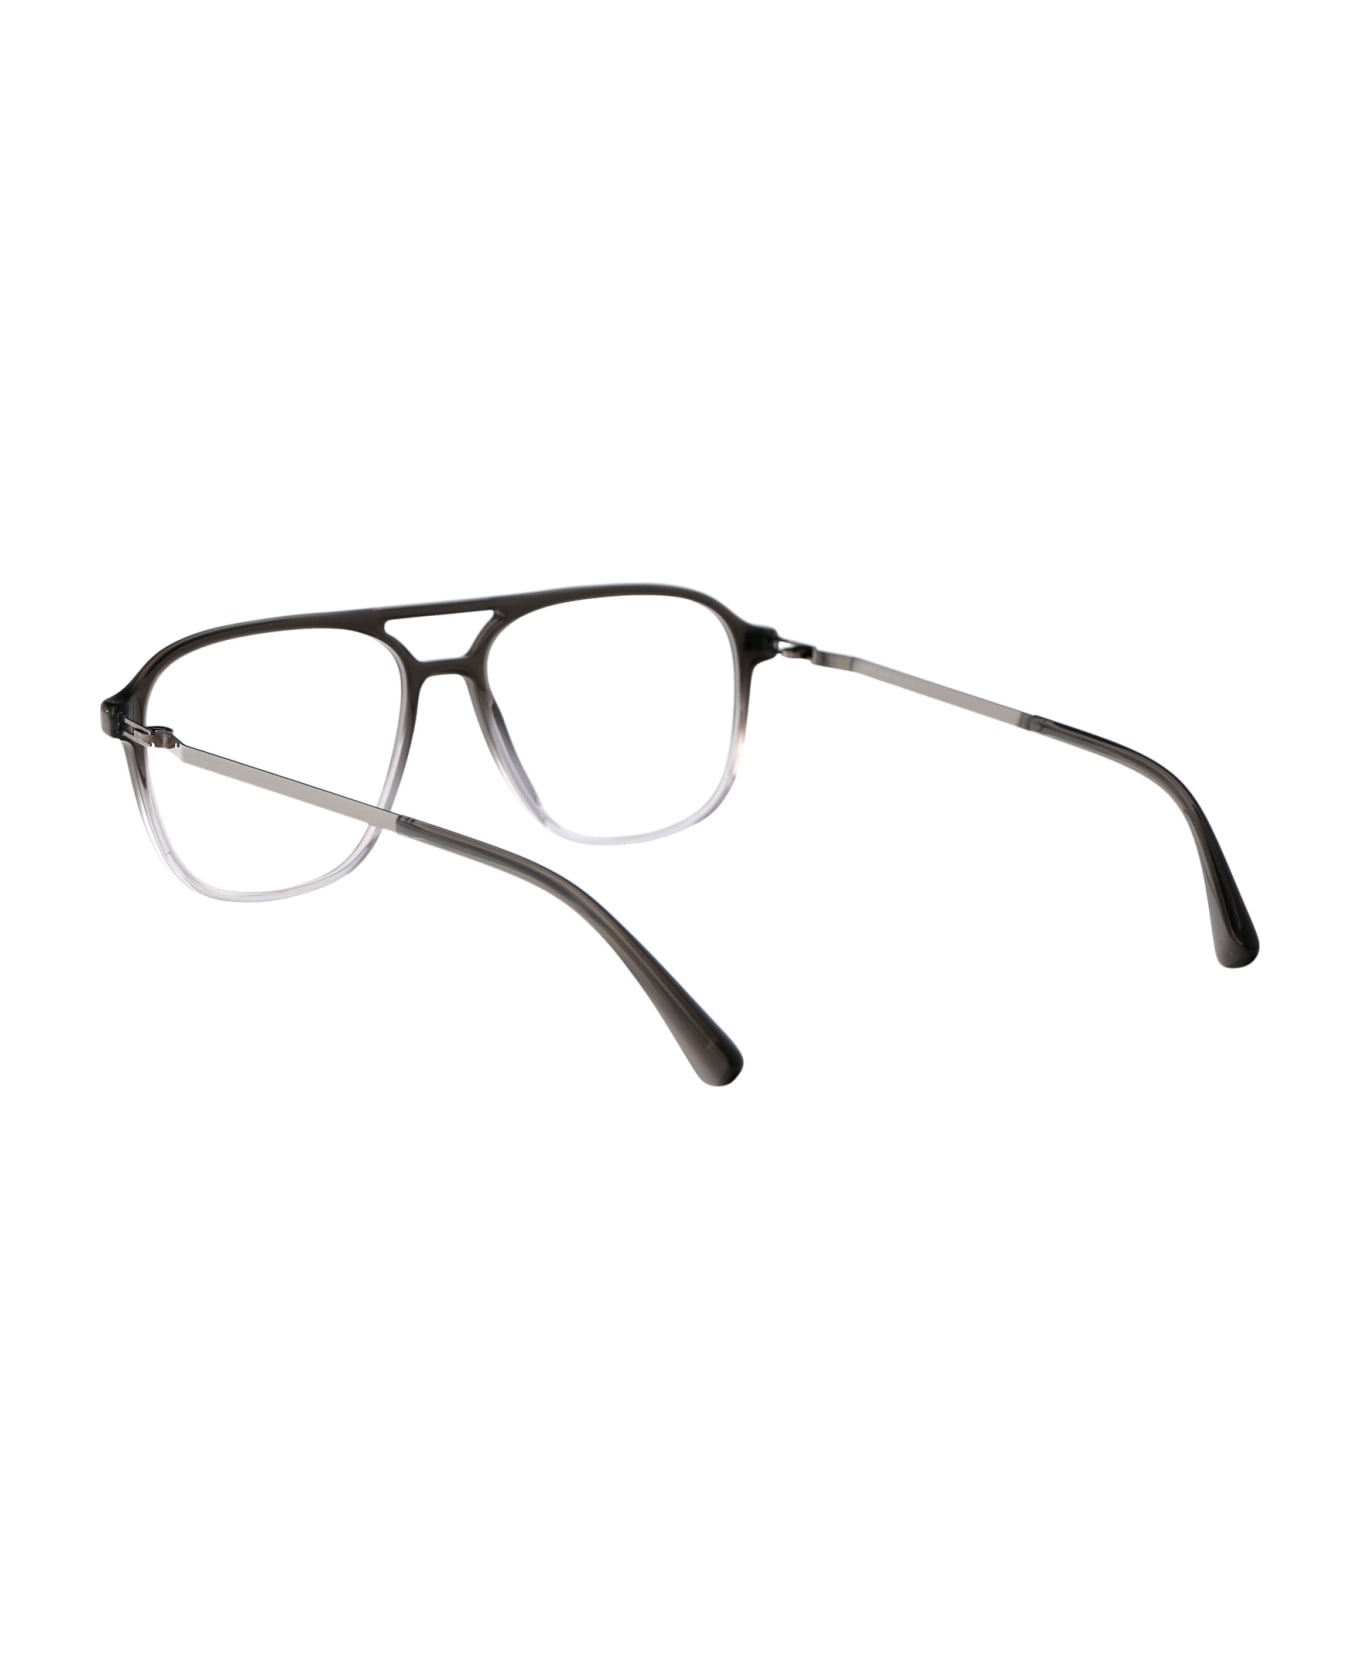 Mykita Gylfi Glasses - 981 C42-Grey Gradient/Shiny Graphi Clear